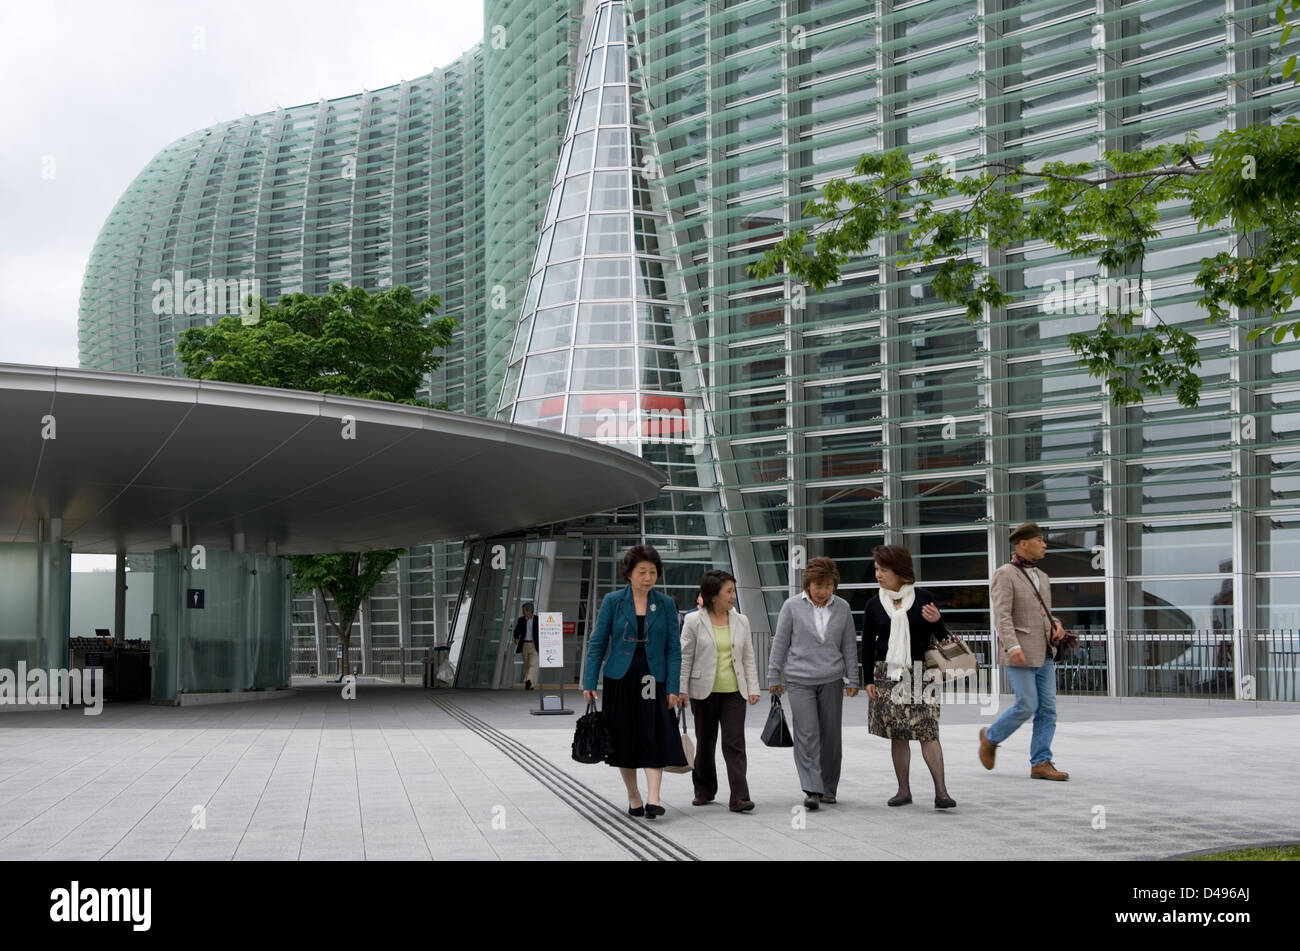 The National Art Center in Roppongi, Tokyo designed by architect Kisho Kurokawa houses 20th century paintings and modern art. Stock Photo